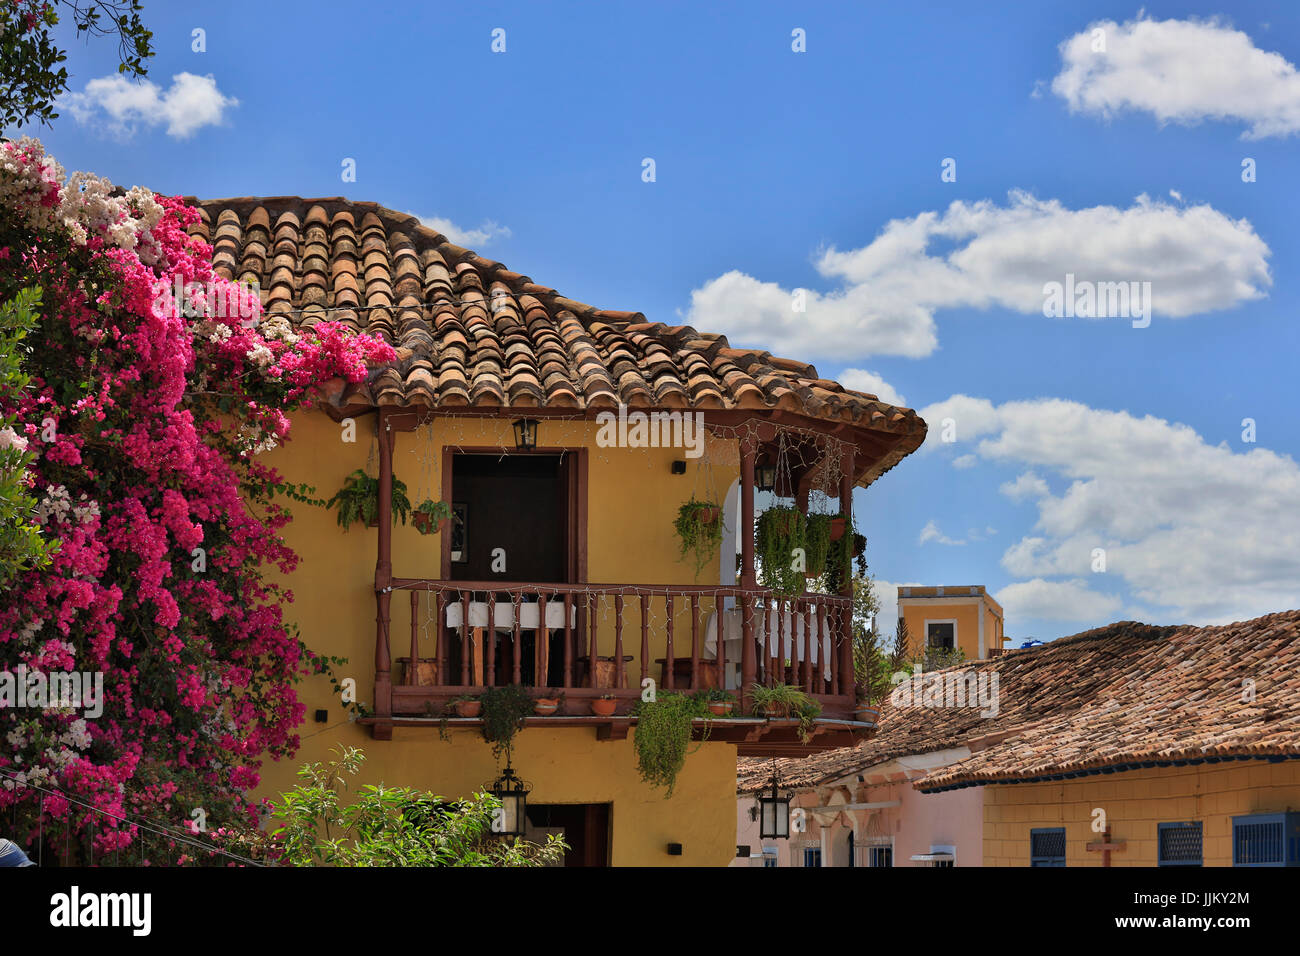 Spanish architecture is the predominant architecture style -  TRINIDAD, CUBA Stock Photo